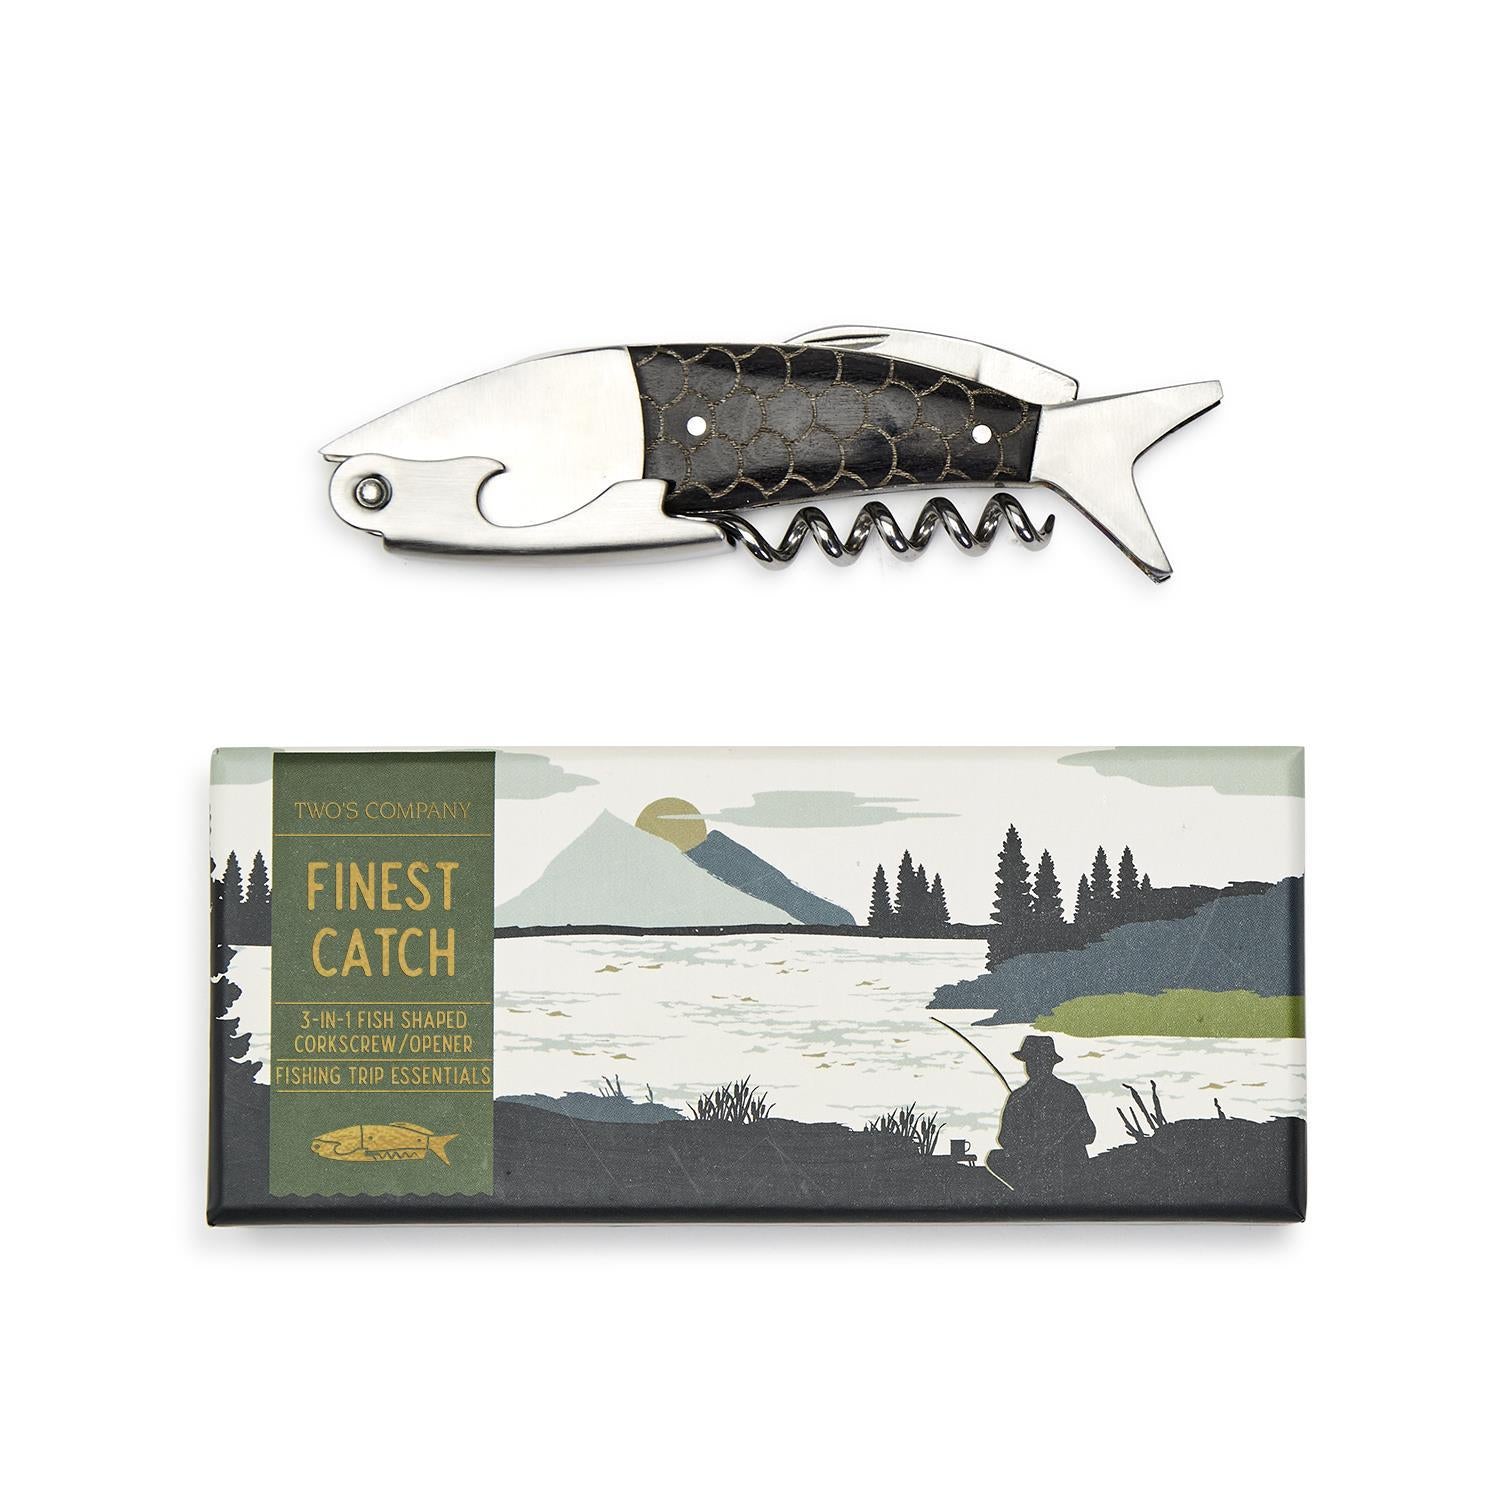 Two's Company Finest Catch 3-in-1 Bottle Tool Opener in Gift Box Includes: Bottle Opener, Corkscrew, Knife